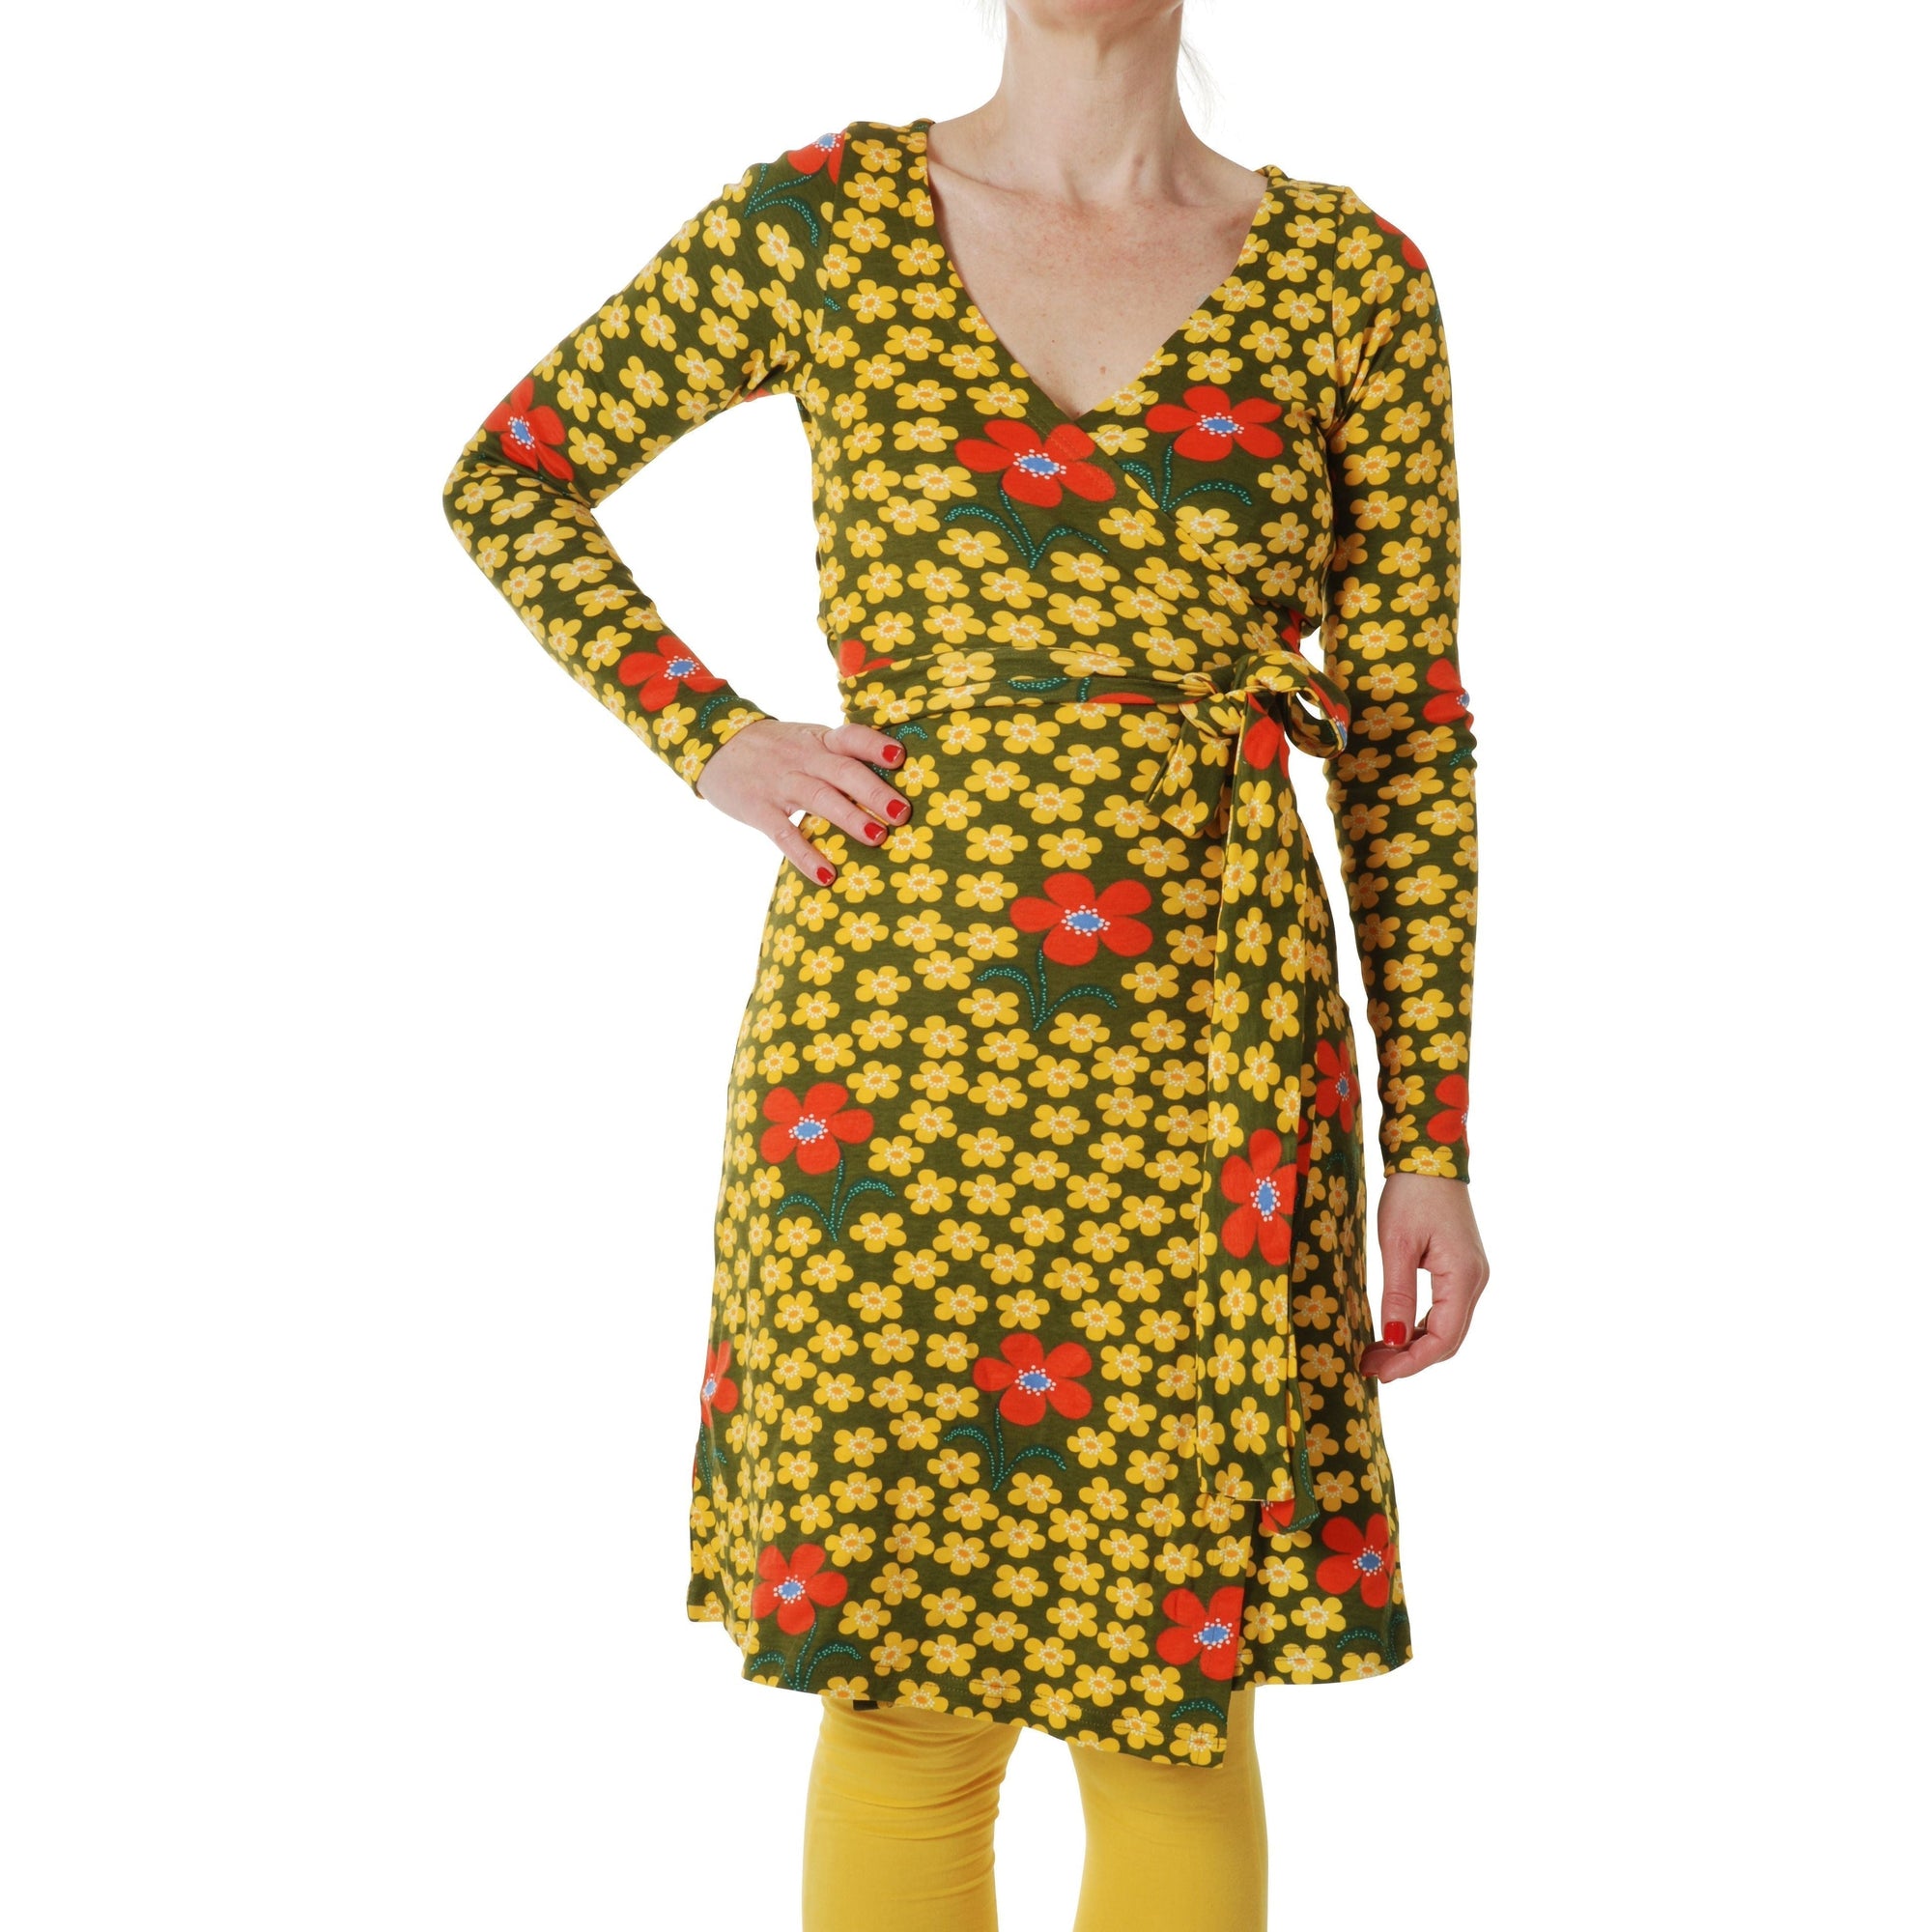 DUNS Sweden Adult's Flower - Olive Long Sleeve Wrap Dress - Size S-Warehouse Find-Modern Rascals